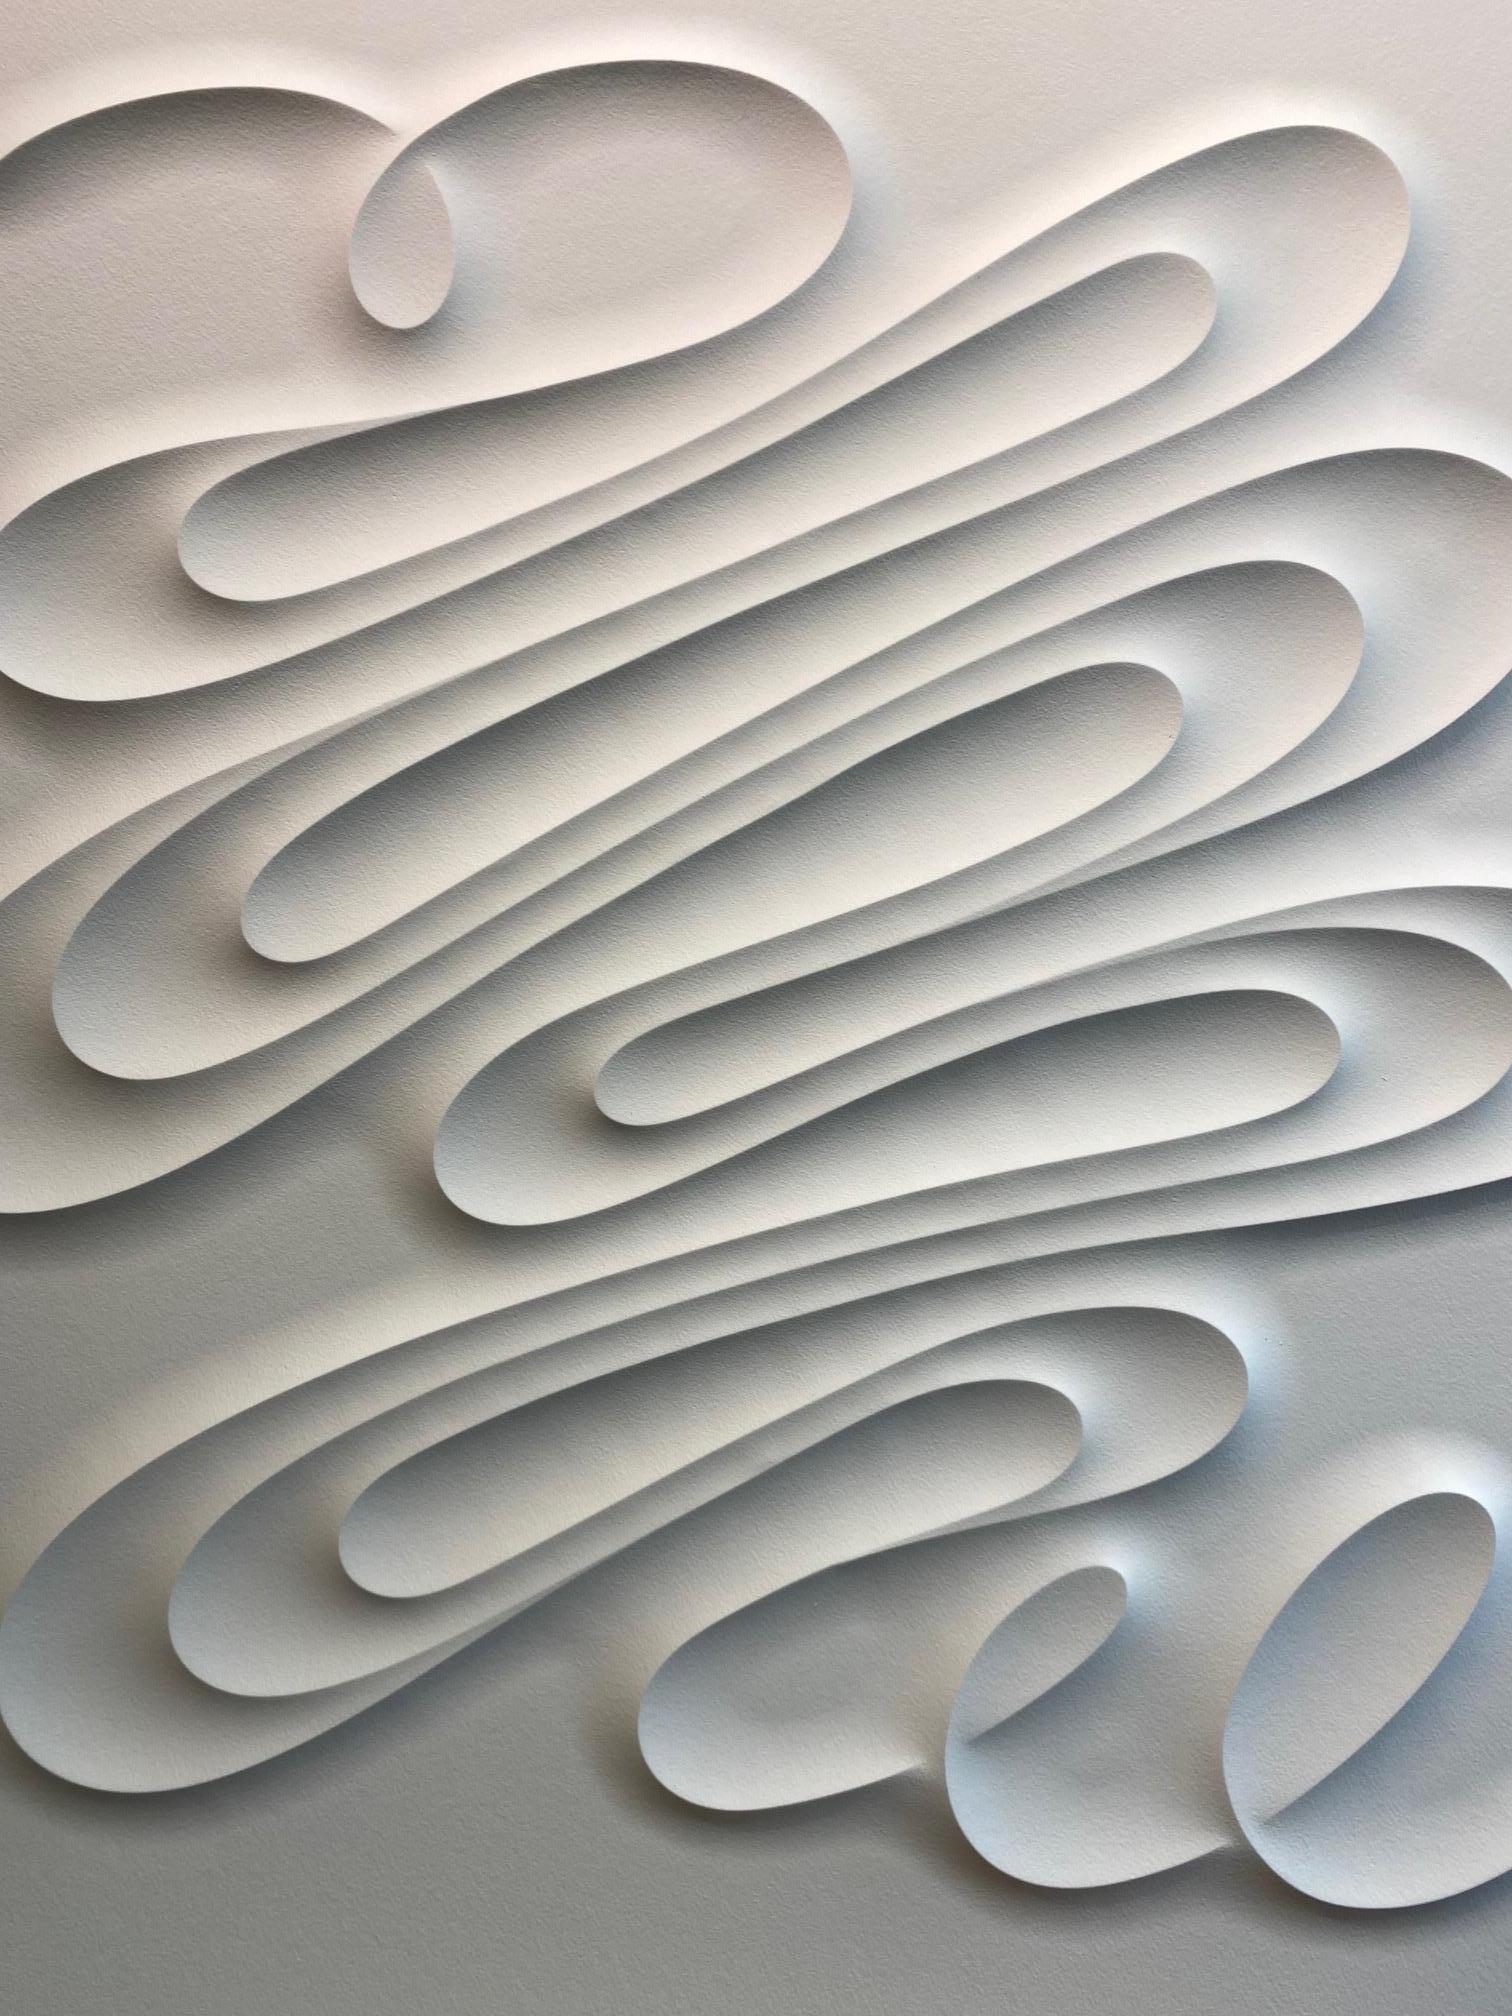 Tango - embossed paper work, minimalist curvilinear white artwork Jacinto Moros 1